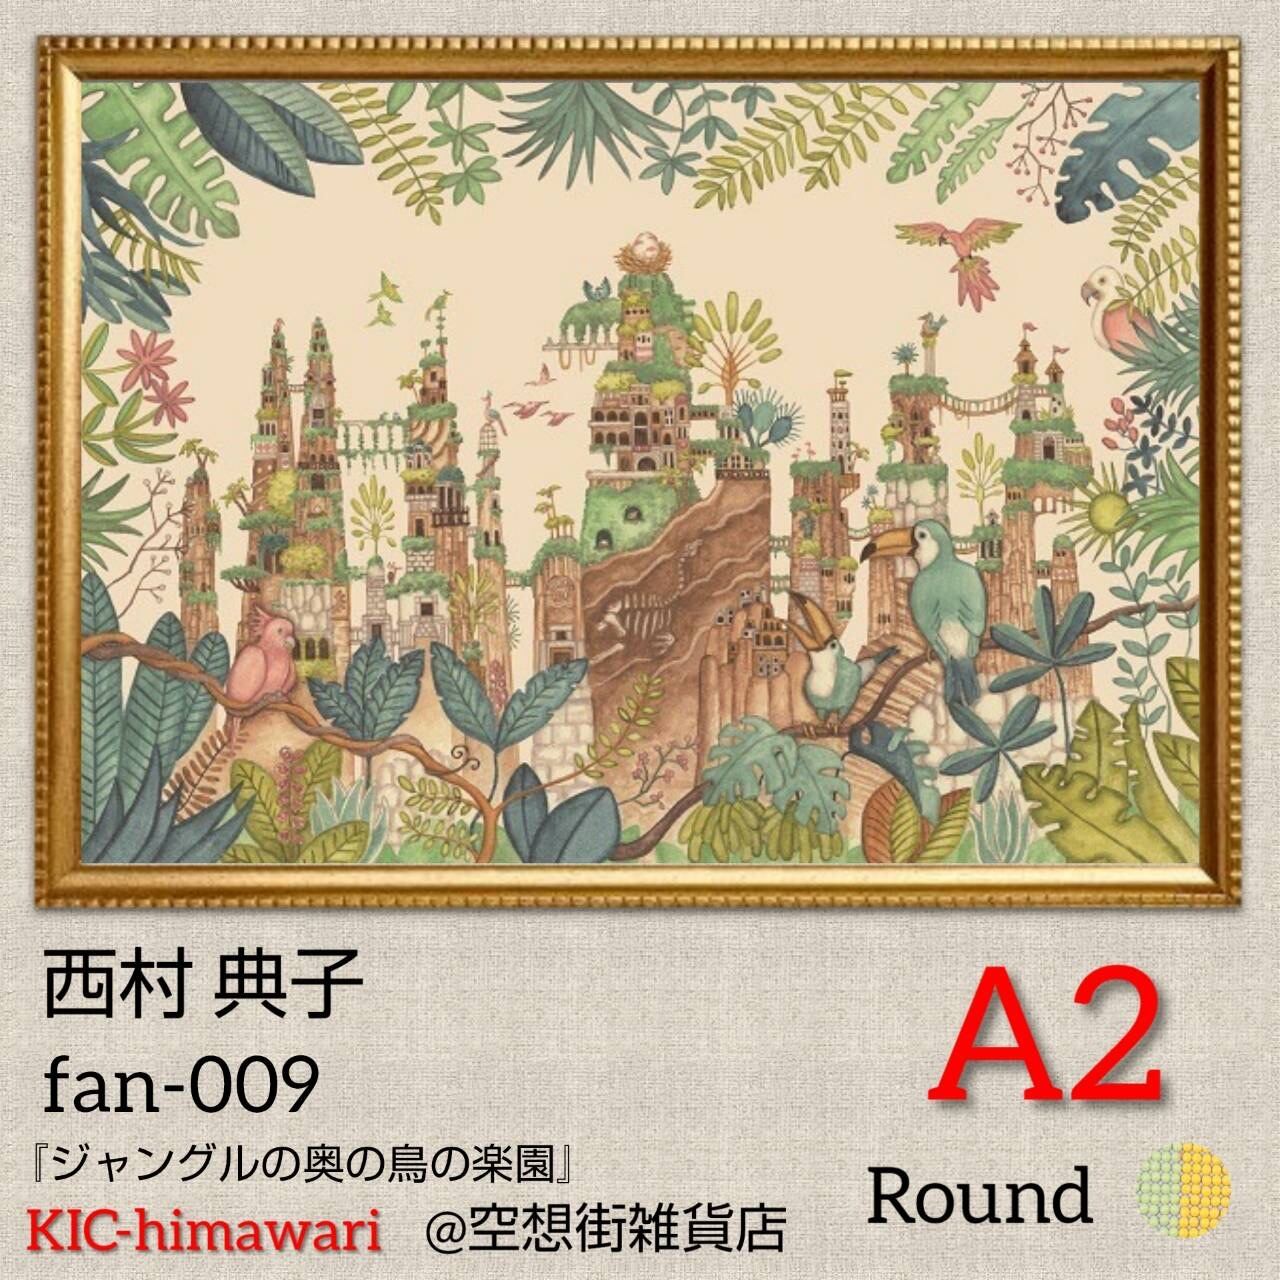 A2サイズ 丸型ビーズ【fan-009】フルダイヤモンドアート | KIC